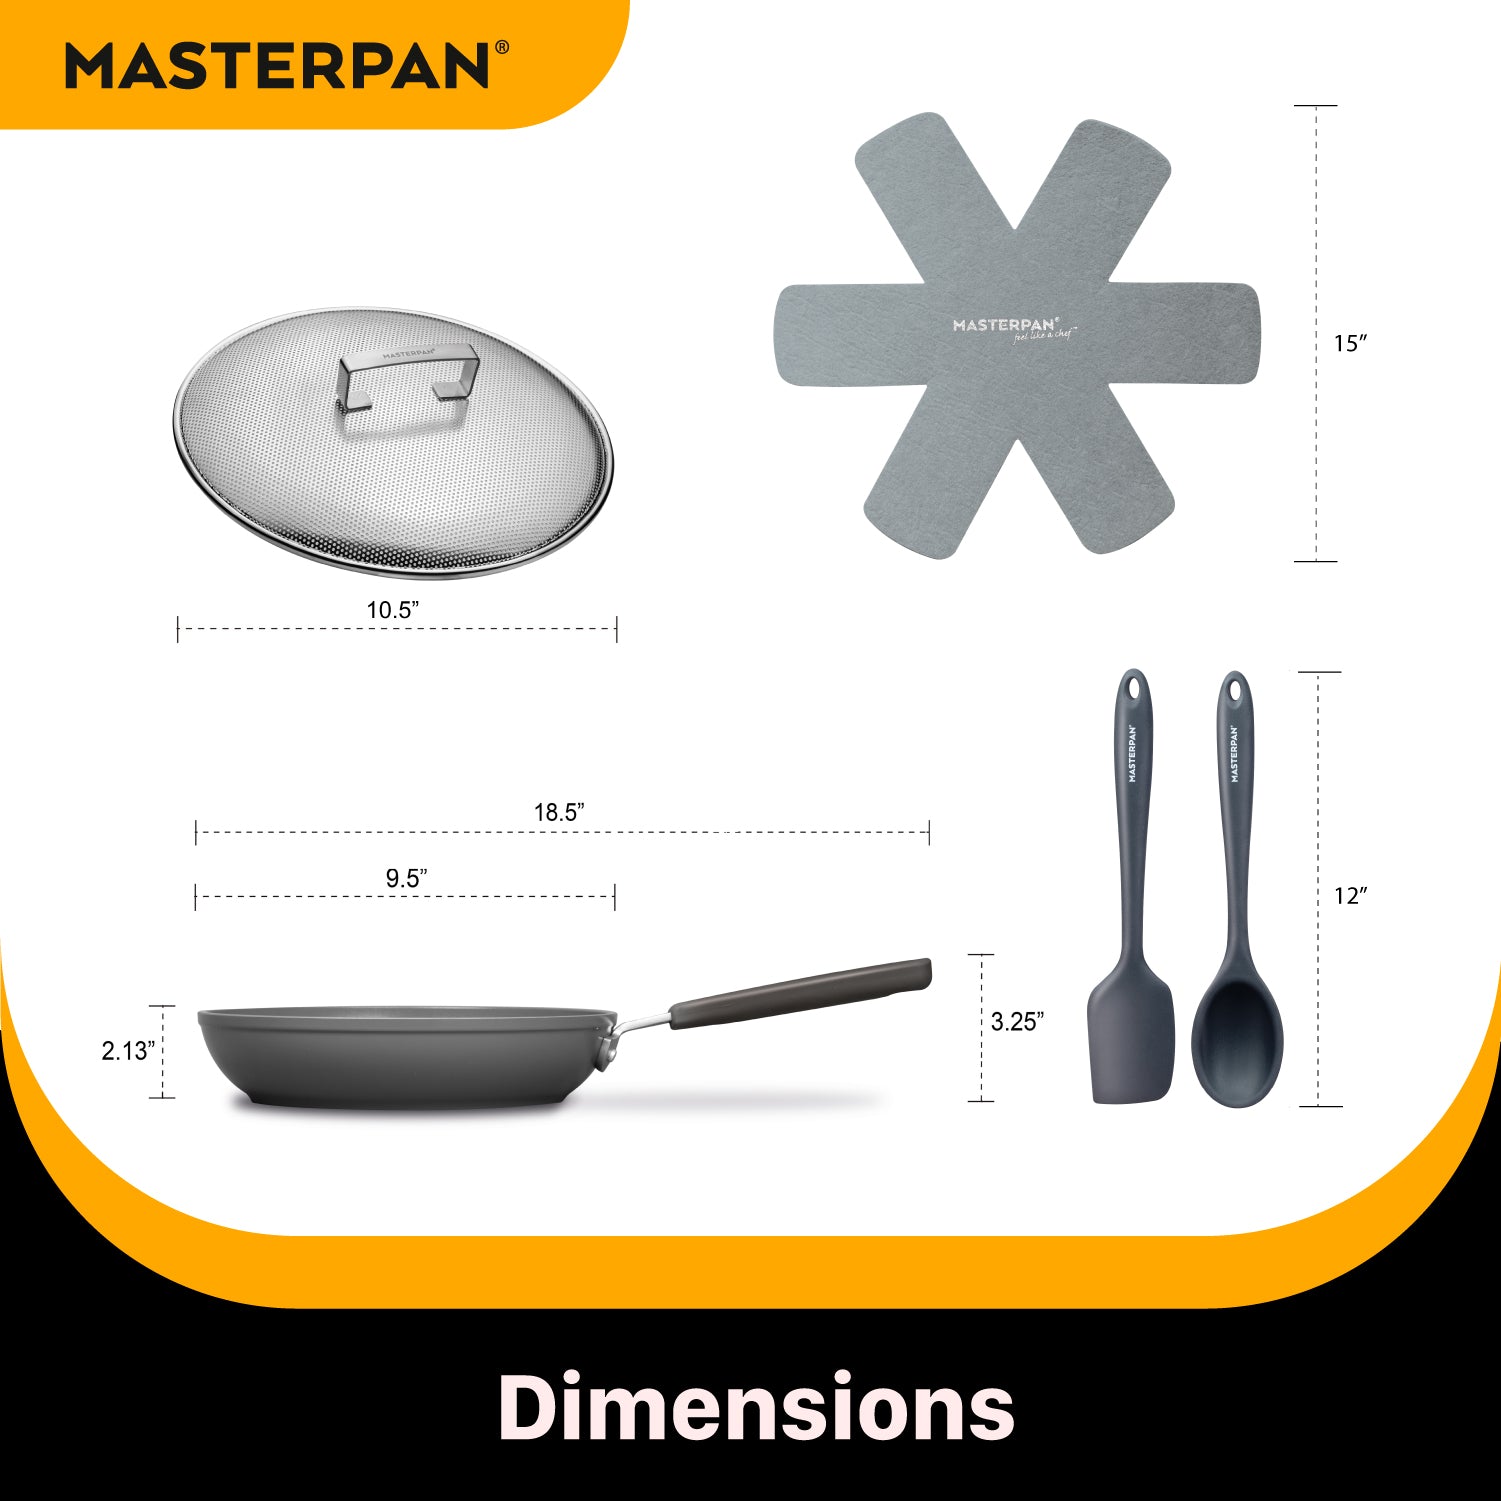 MasterClass Ceramic Non-Stick Eco 24cm Crêpe Pan 